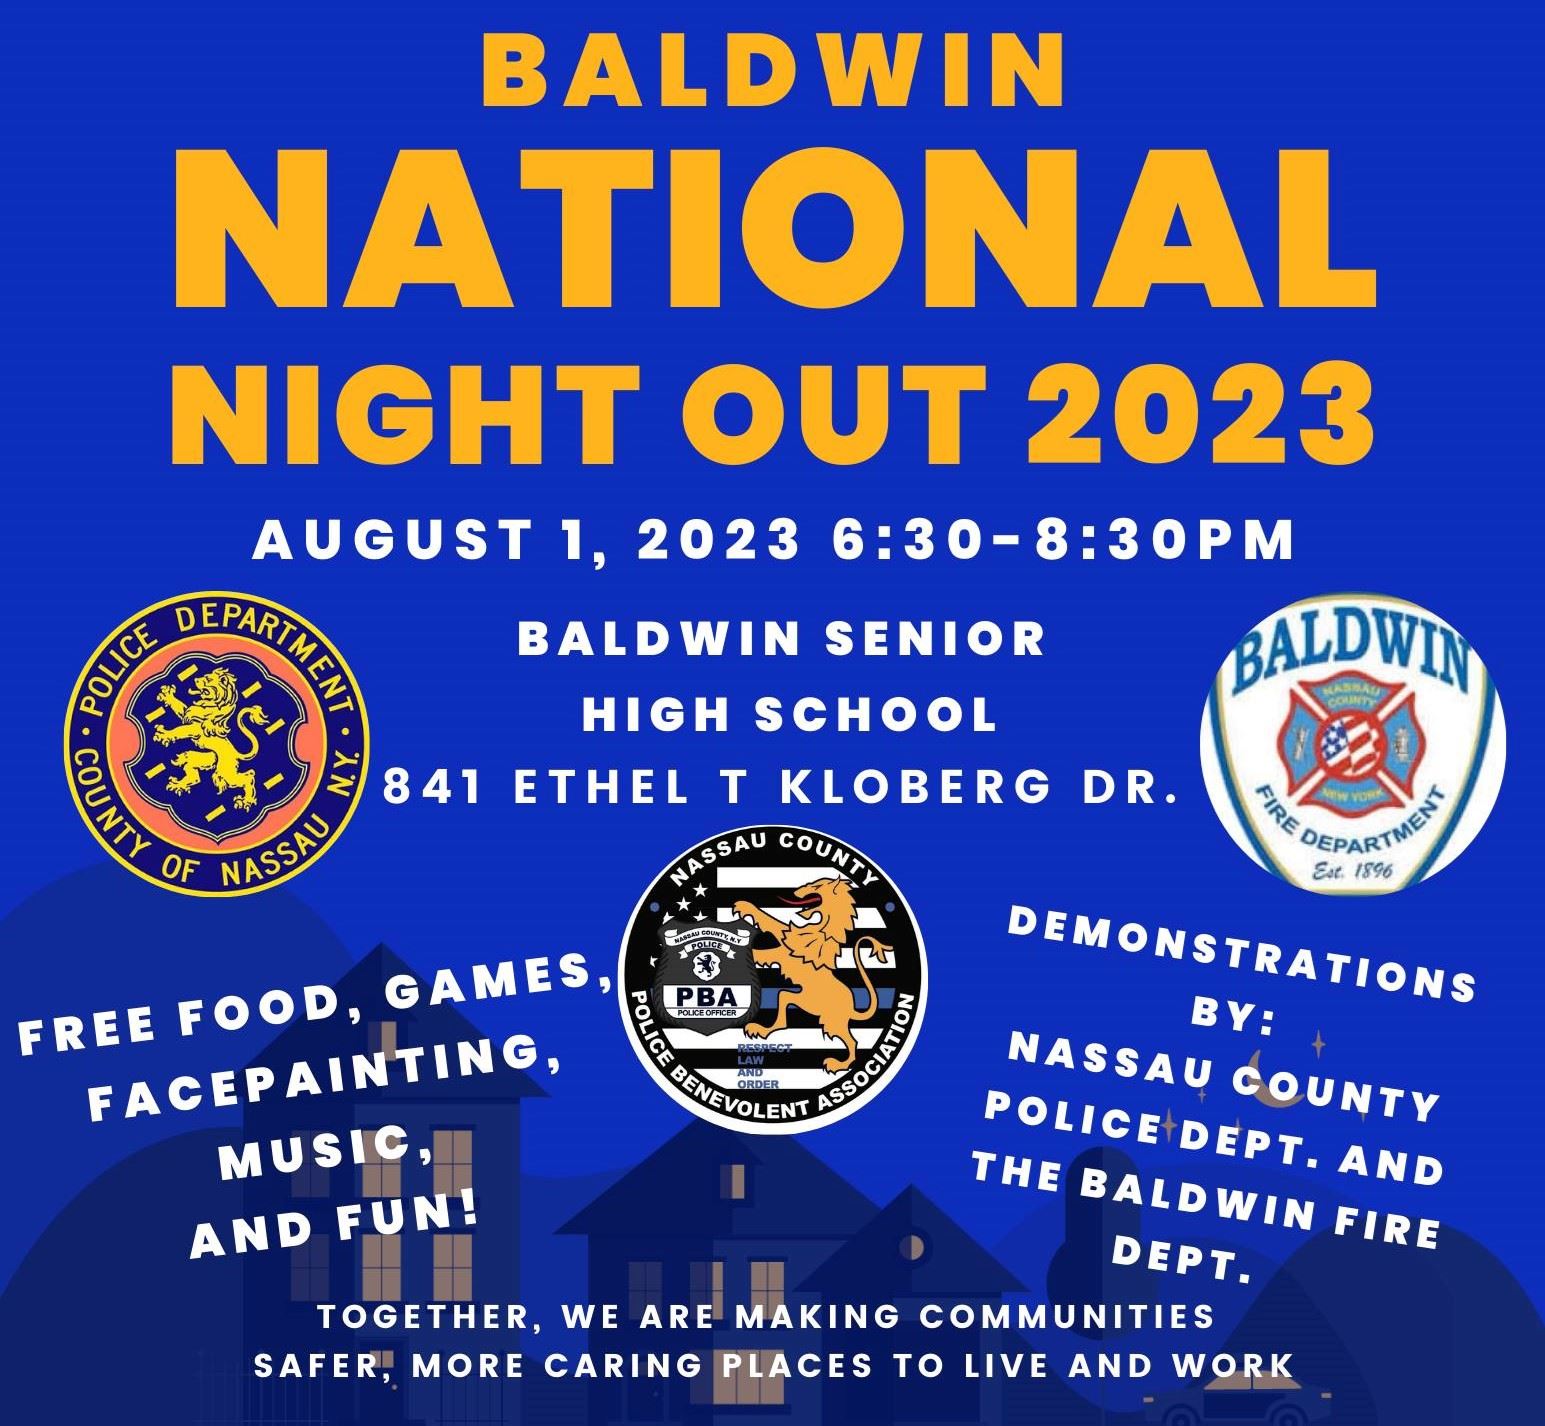 National Night Out 2023 - Baldwin